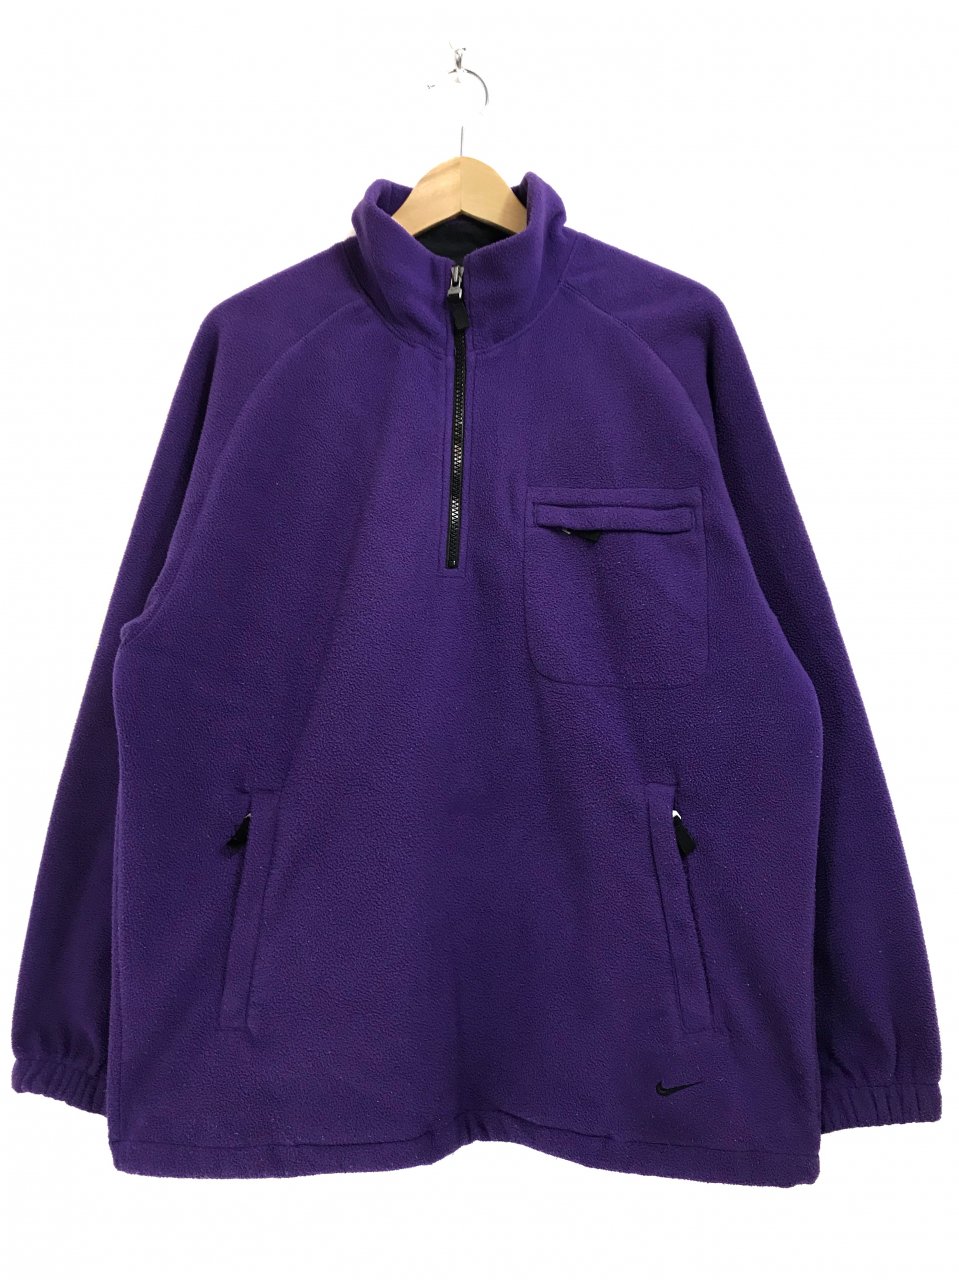 NIKE Half-Zip Pullover Fleece Jacket 紫 L ナイキ ハーフジップ プル 